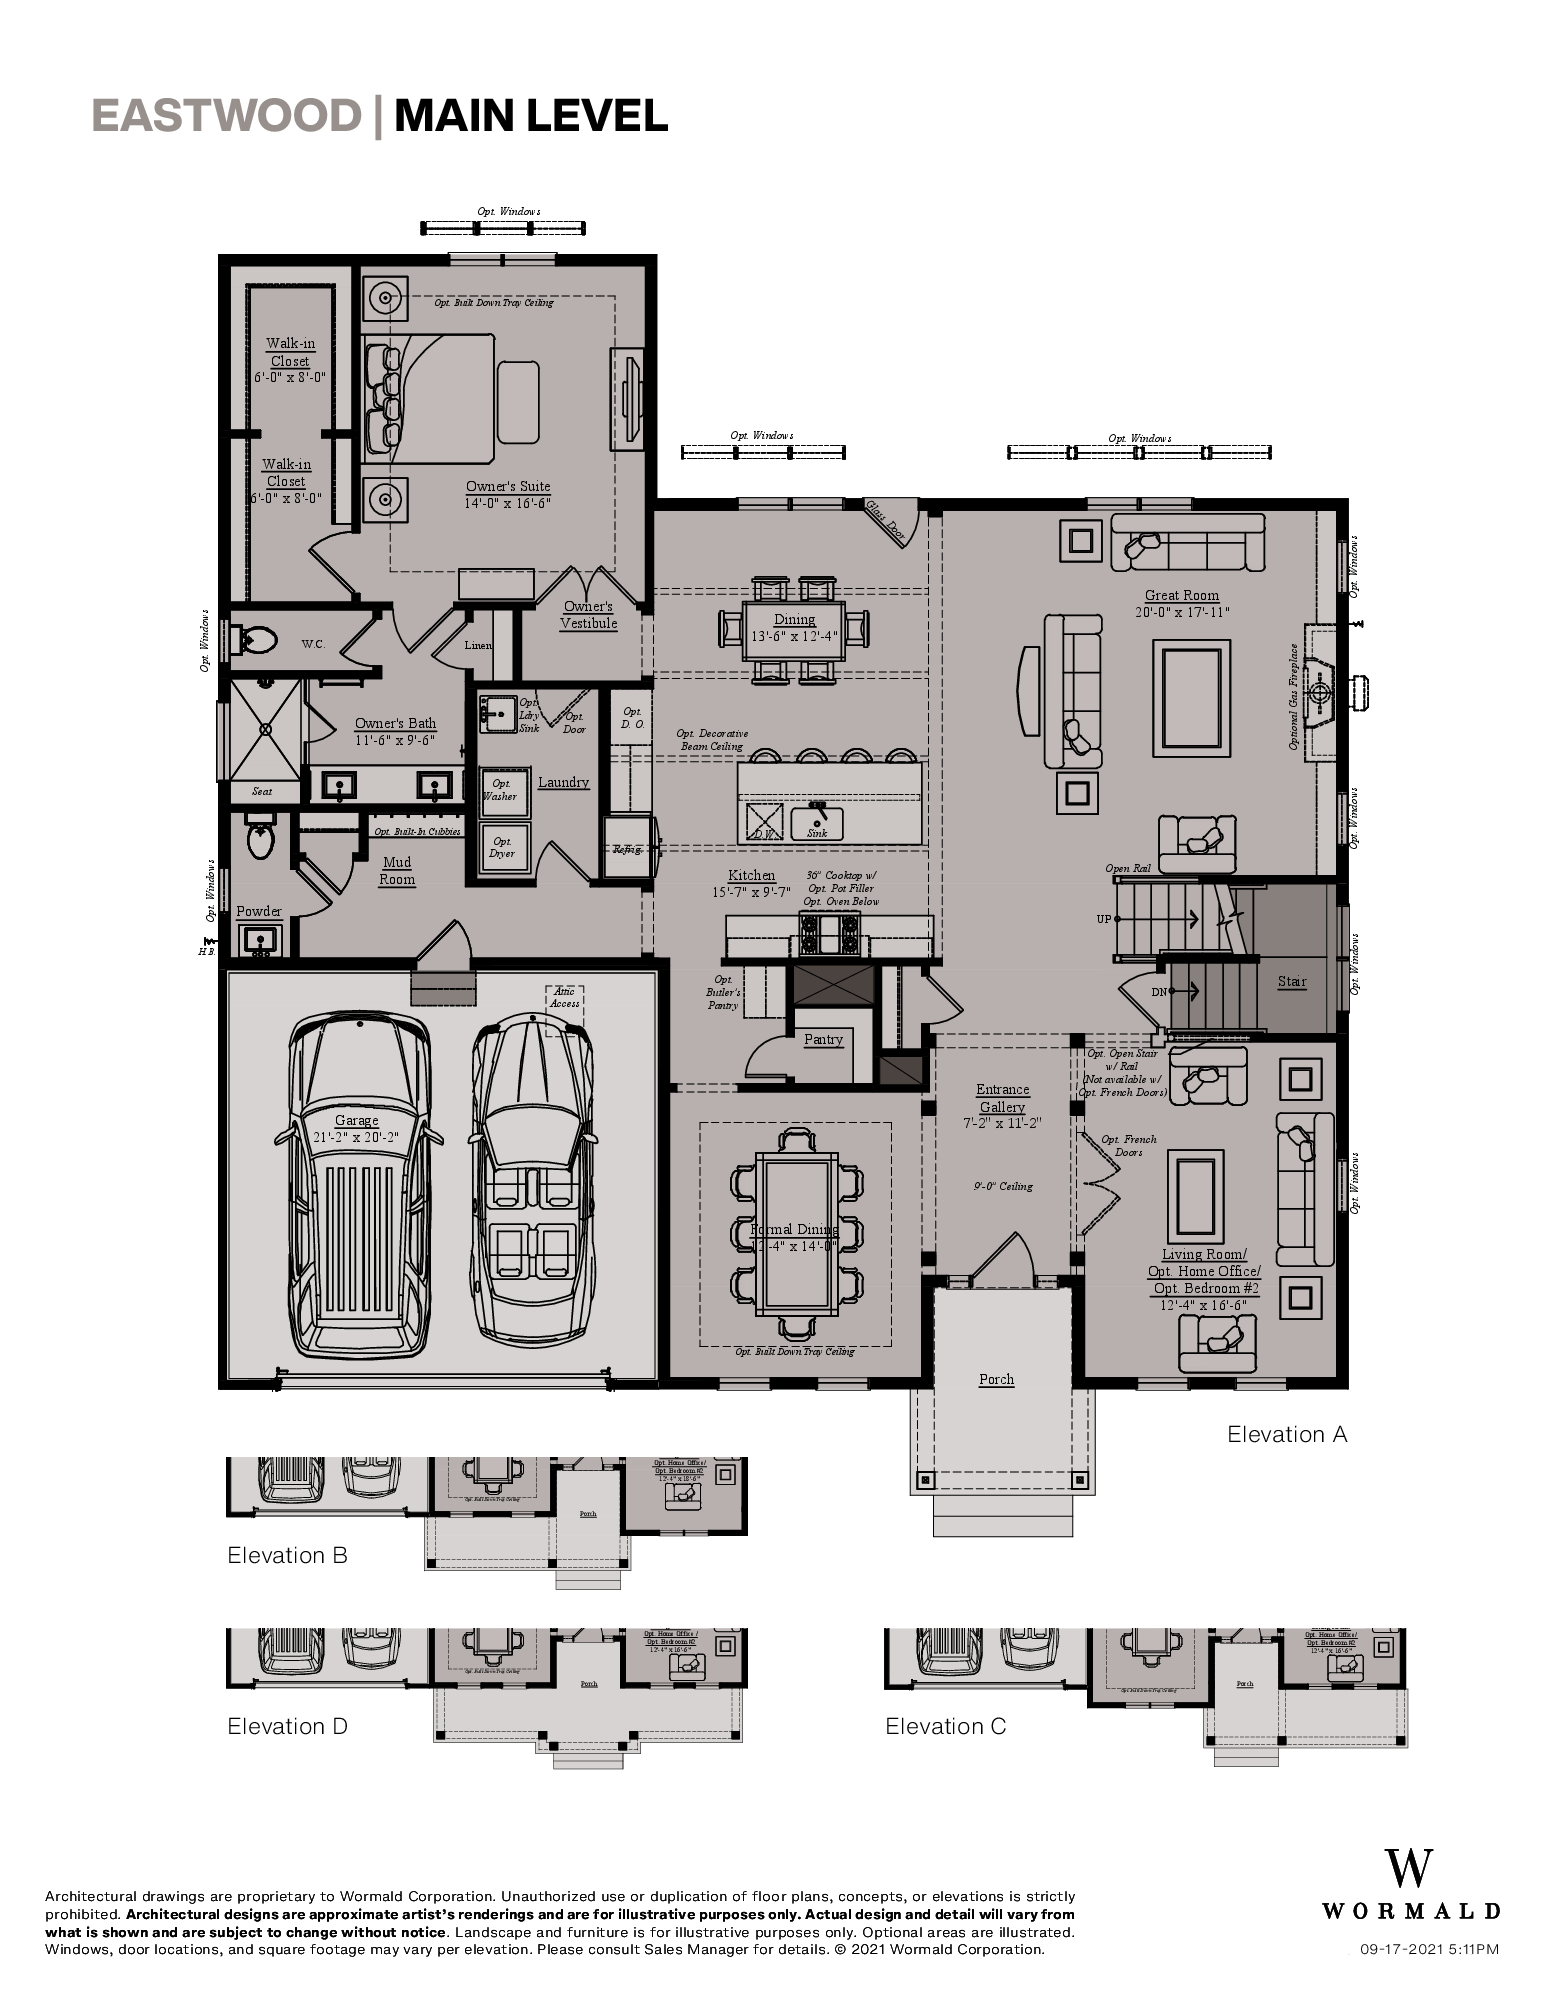 The Eastwood floor plan 0